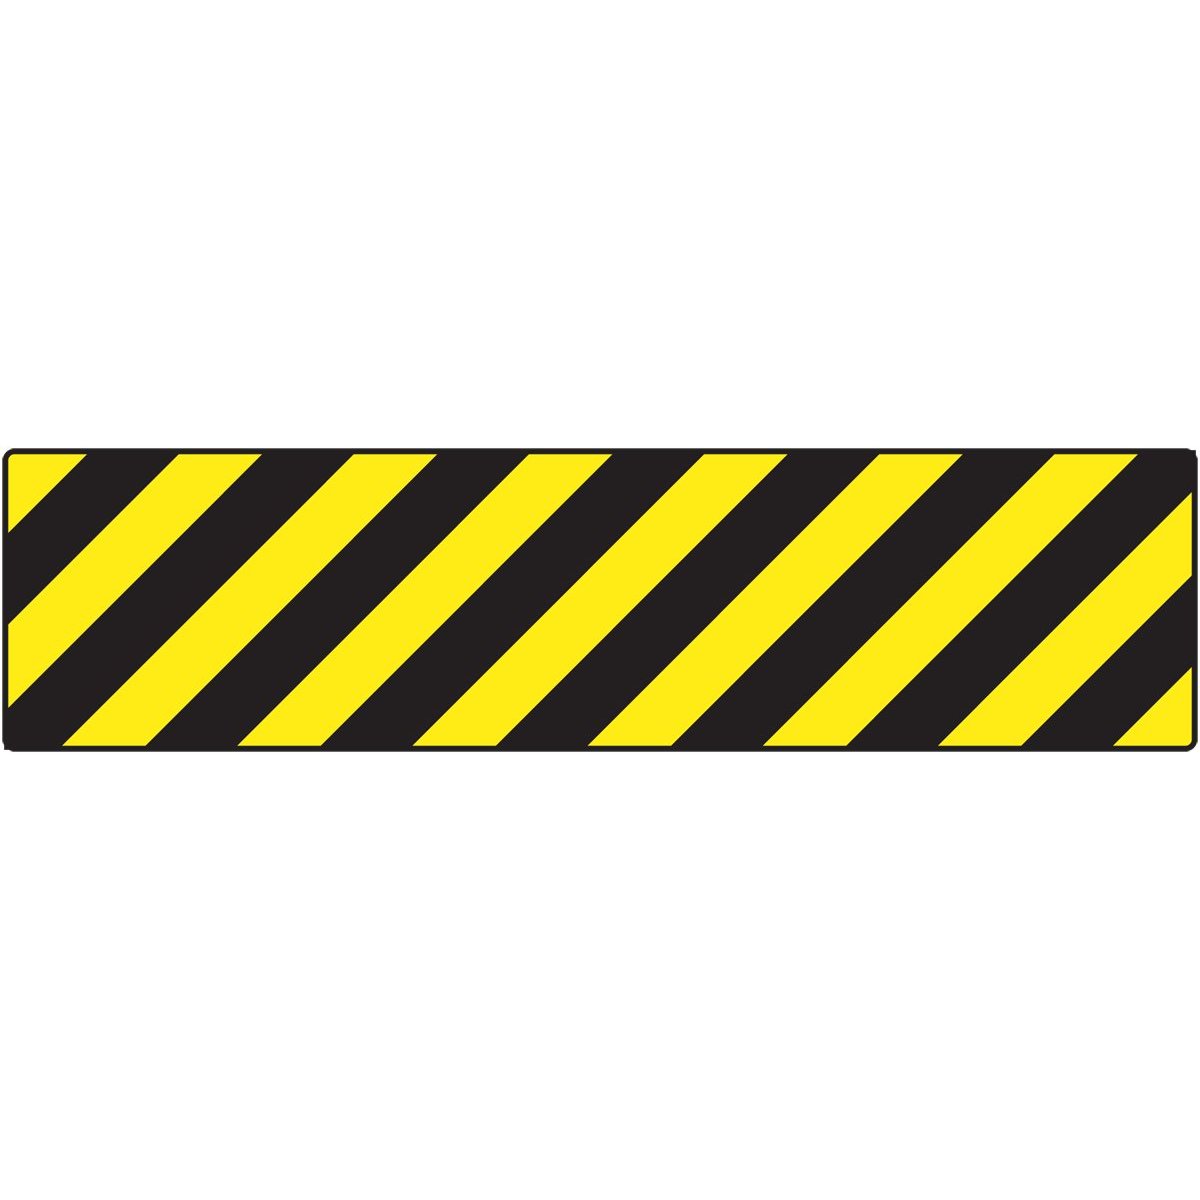 Construction Tape Border Clipart